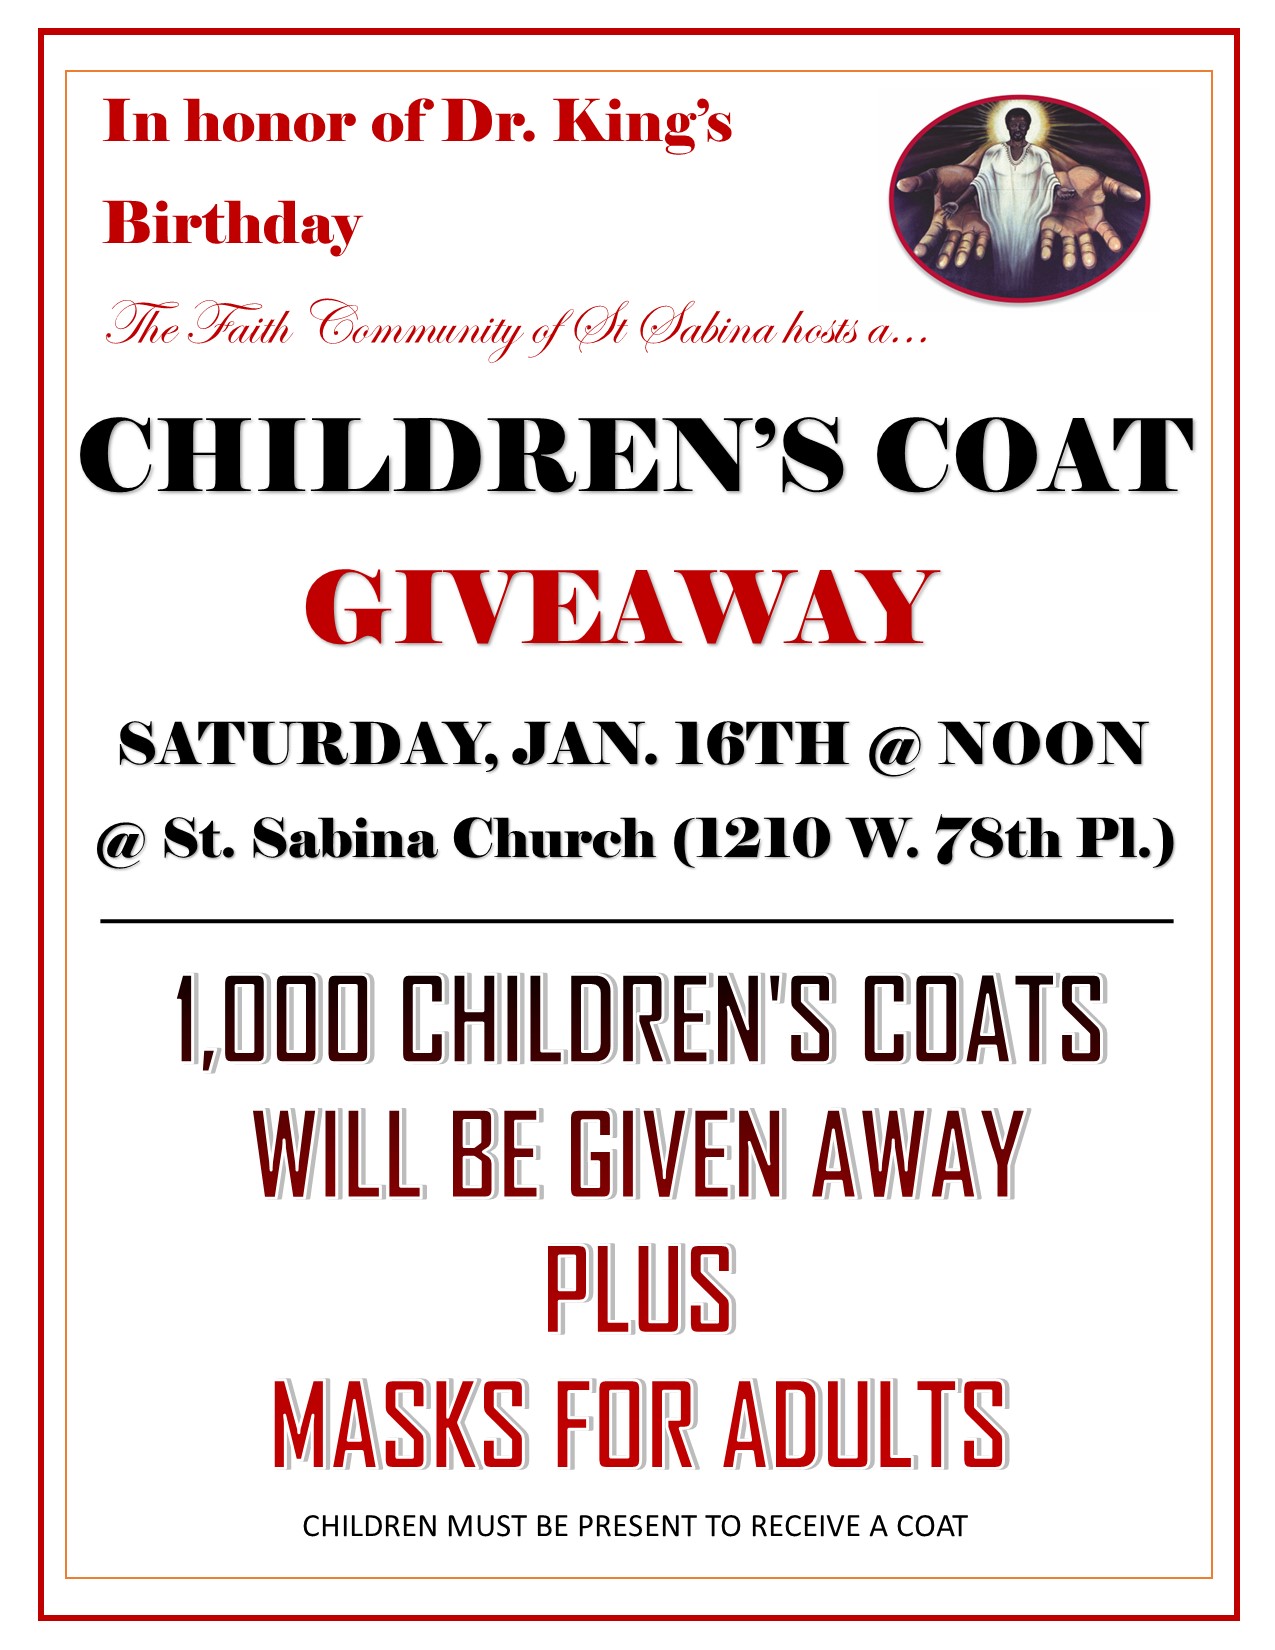 Children's Coat Giveaway at St Sabina Church on January 16, 2021 at 12noon